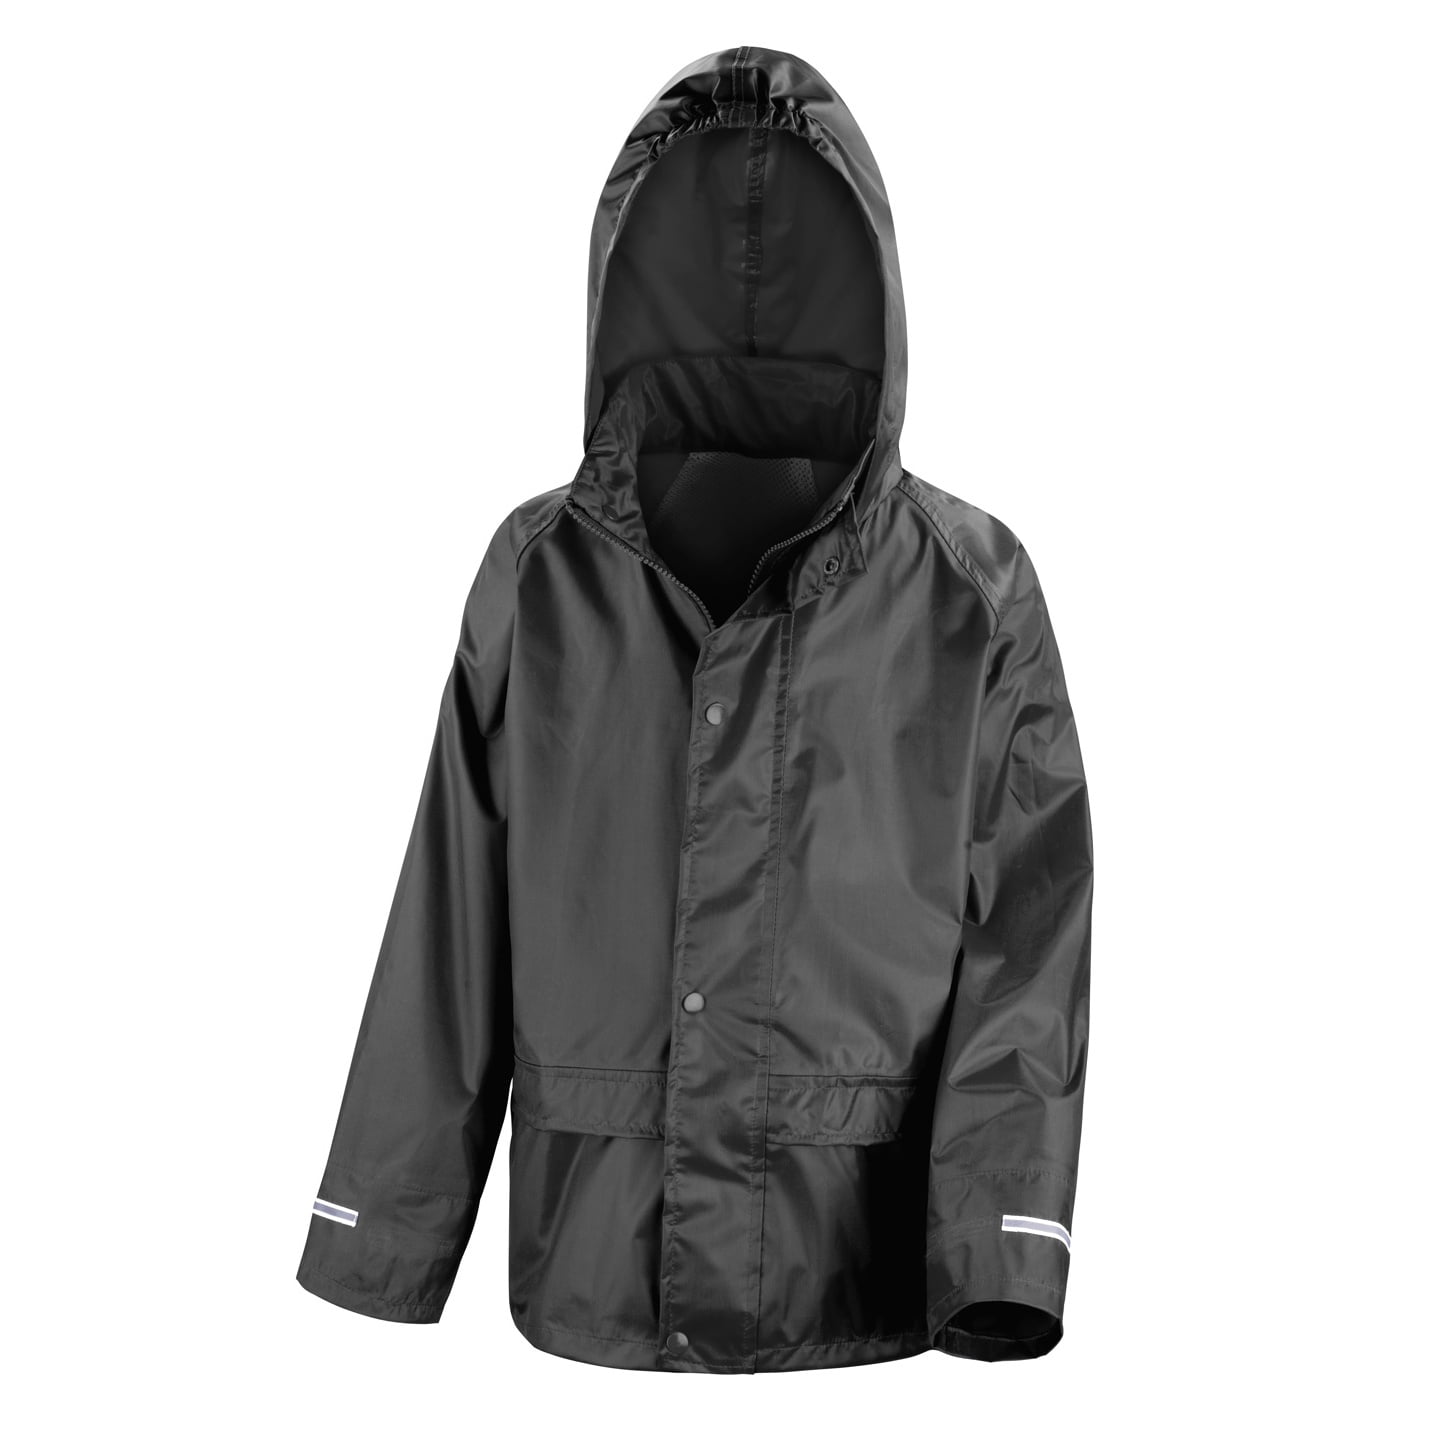 Waterproof Baby Windbreaker Casual Outerwear Camo Raincoat for Kids IjnUhb Boys Jacket with Hood 